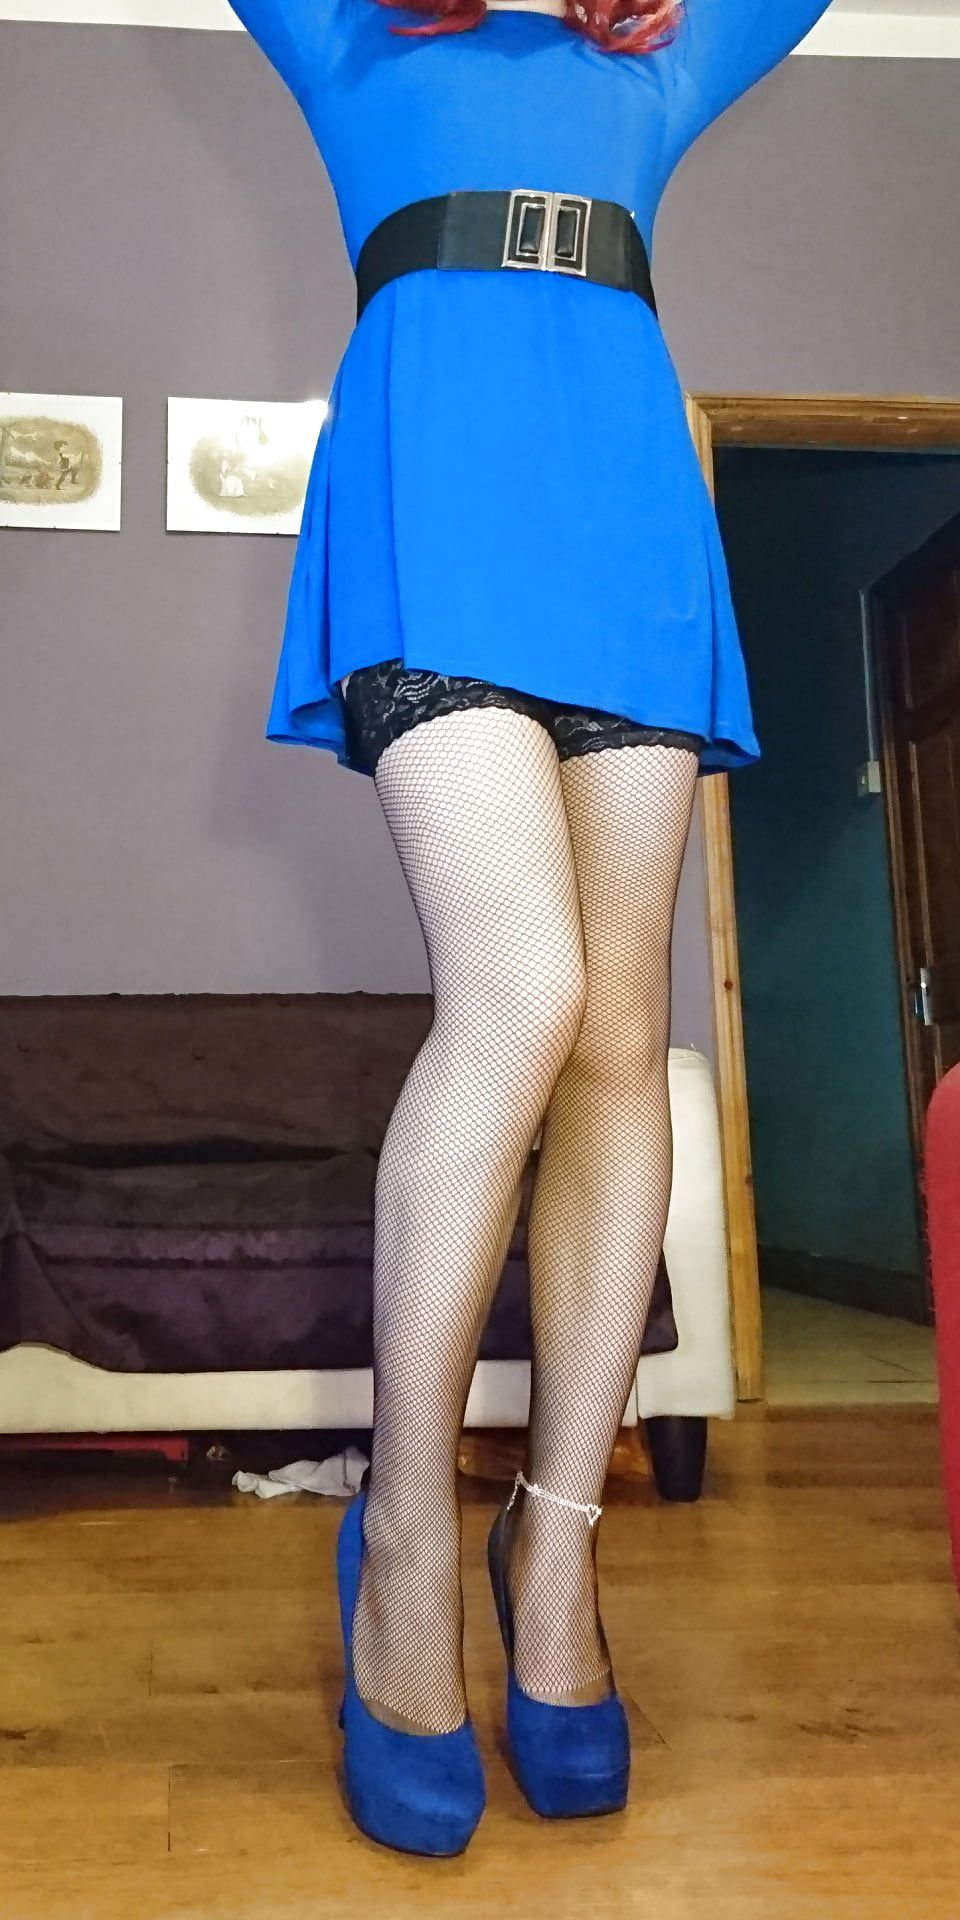 Marie Crossdresser in stockings and blue dress #23